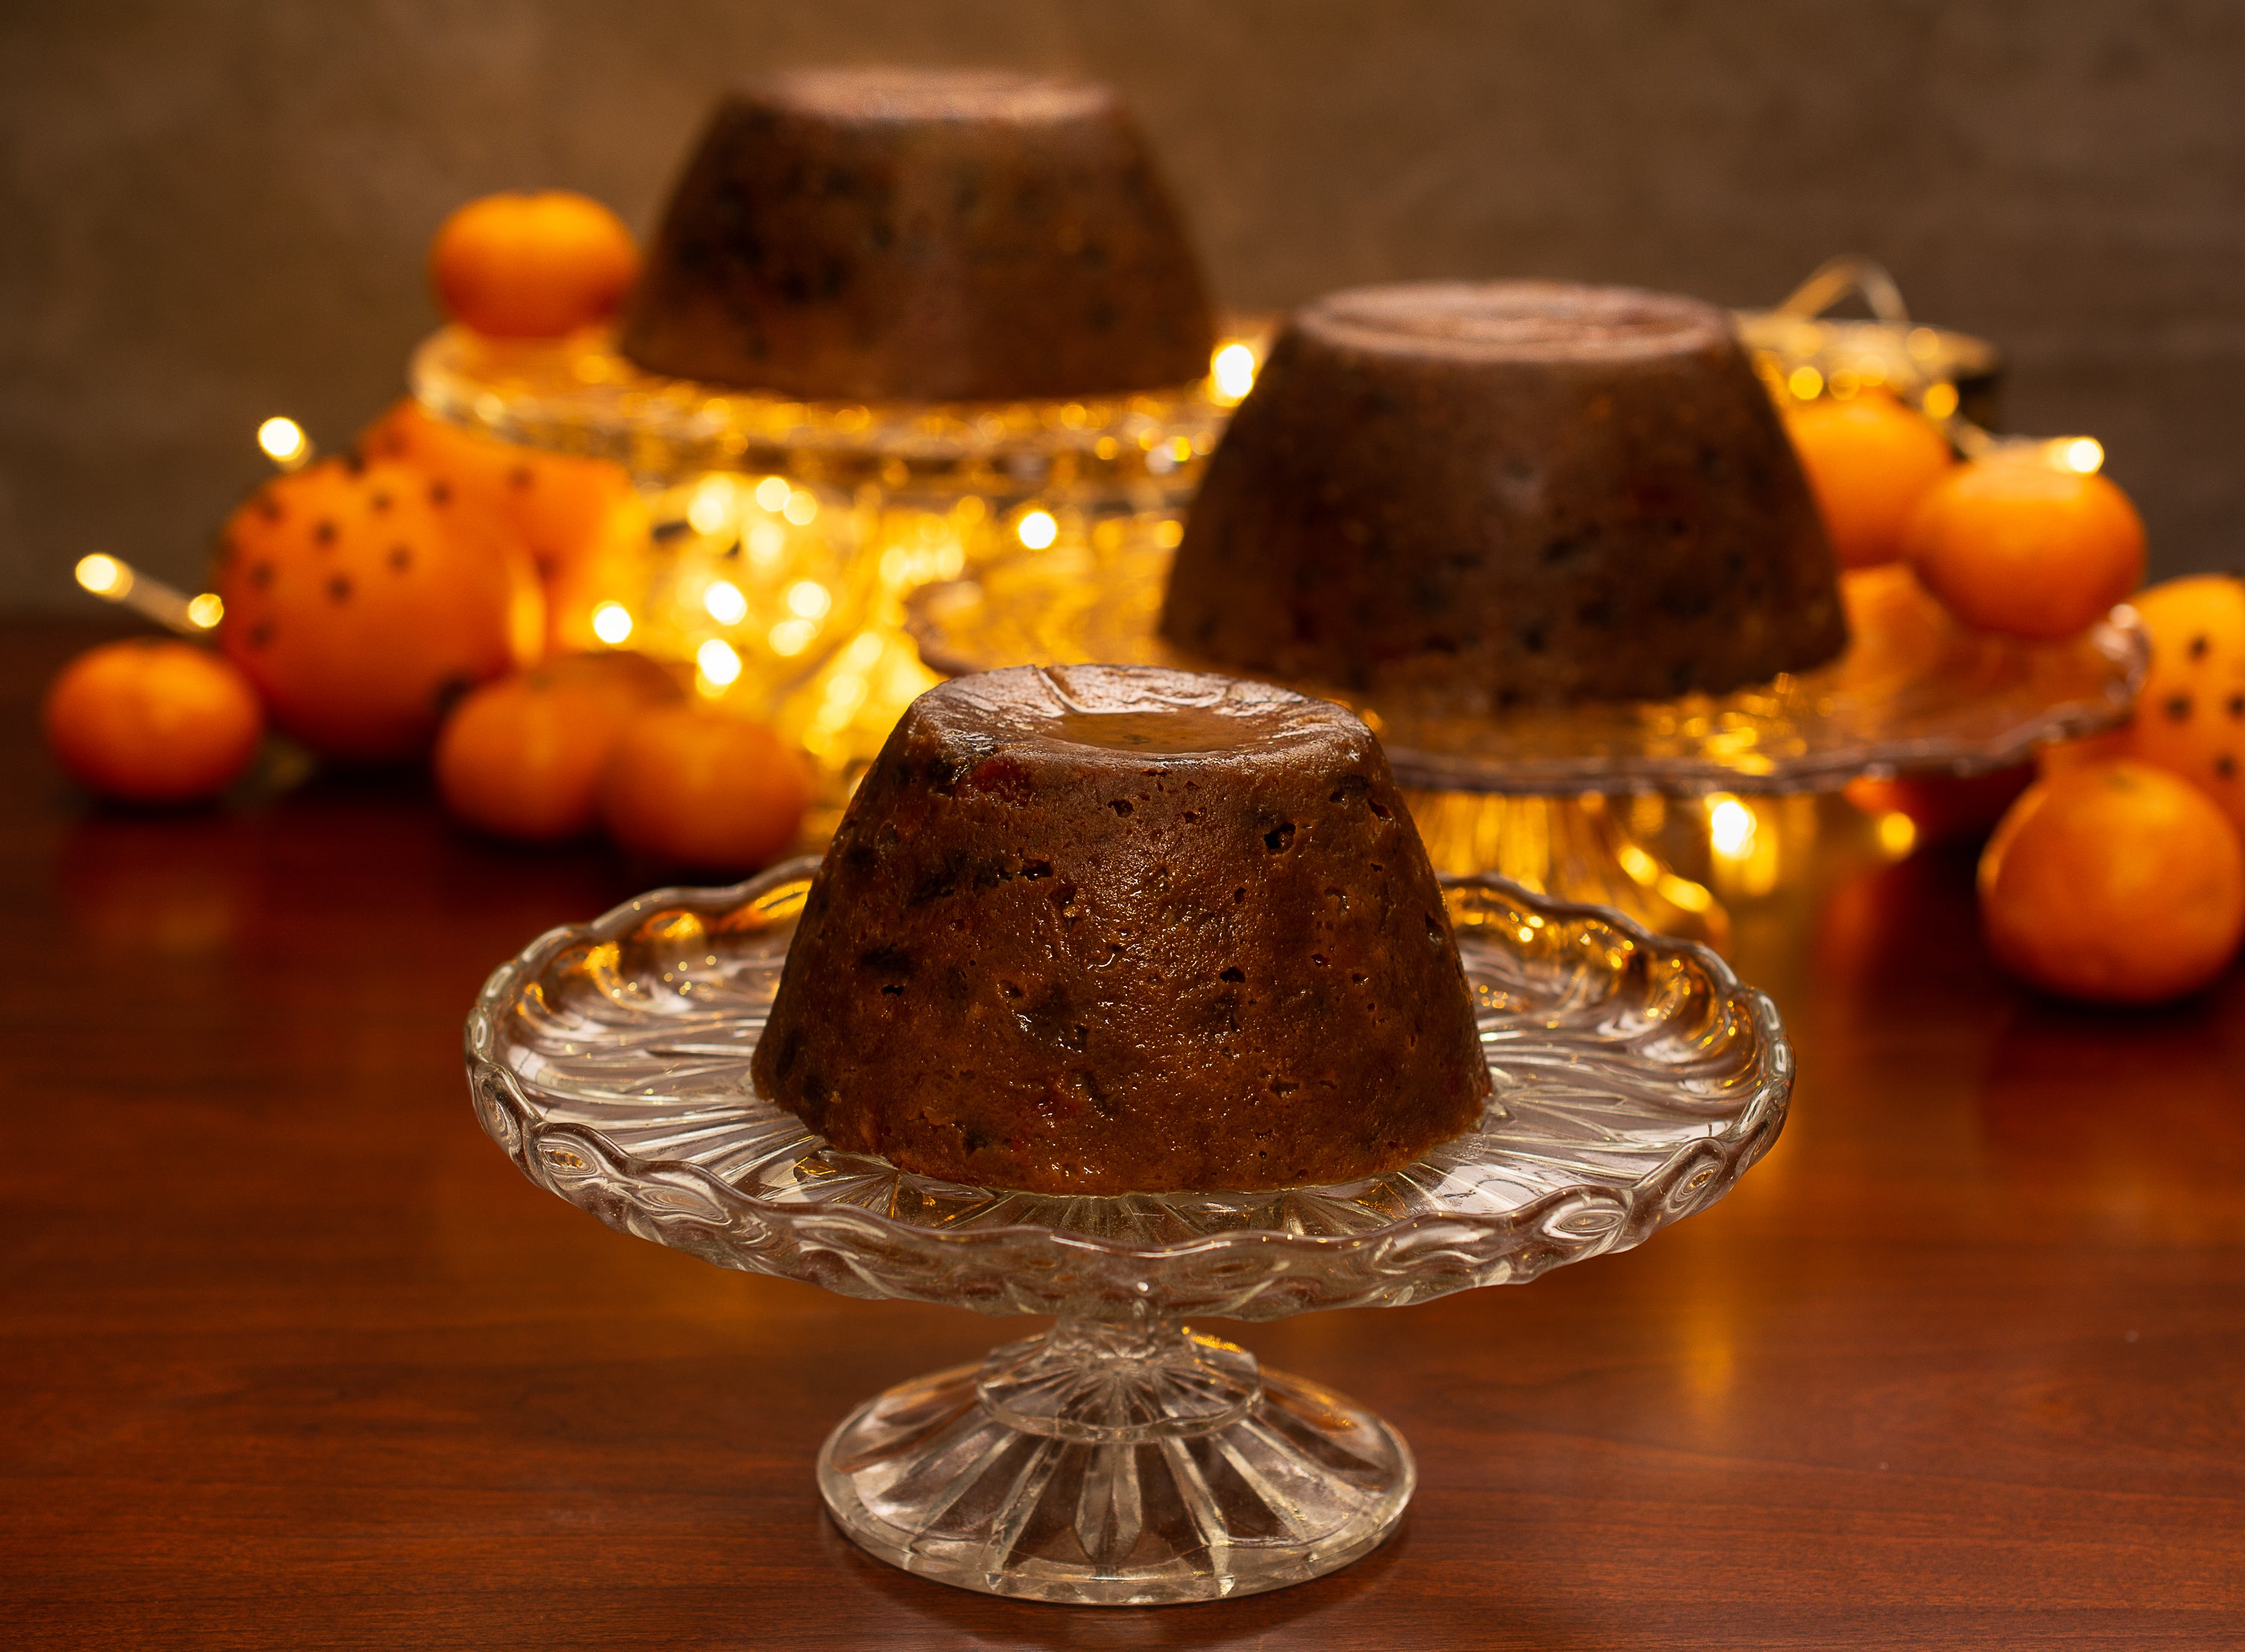 Chocolate Orange Christmas Pudding Recipe